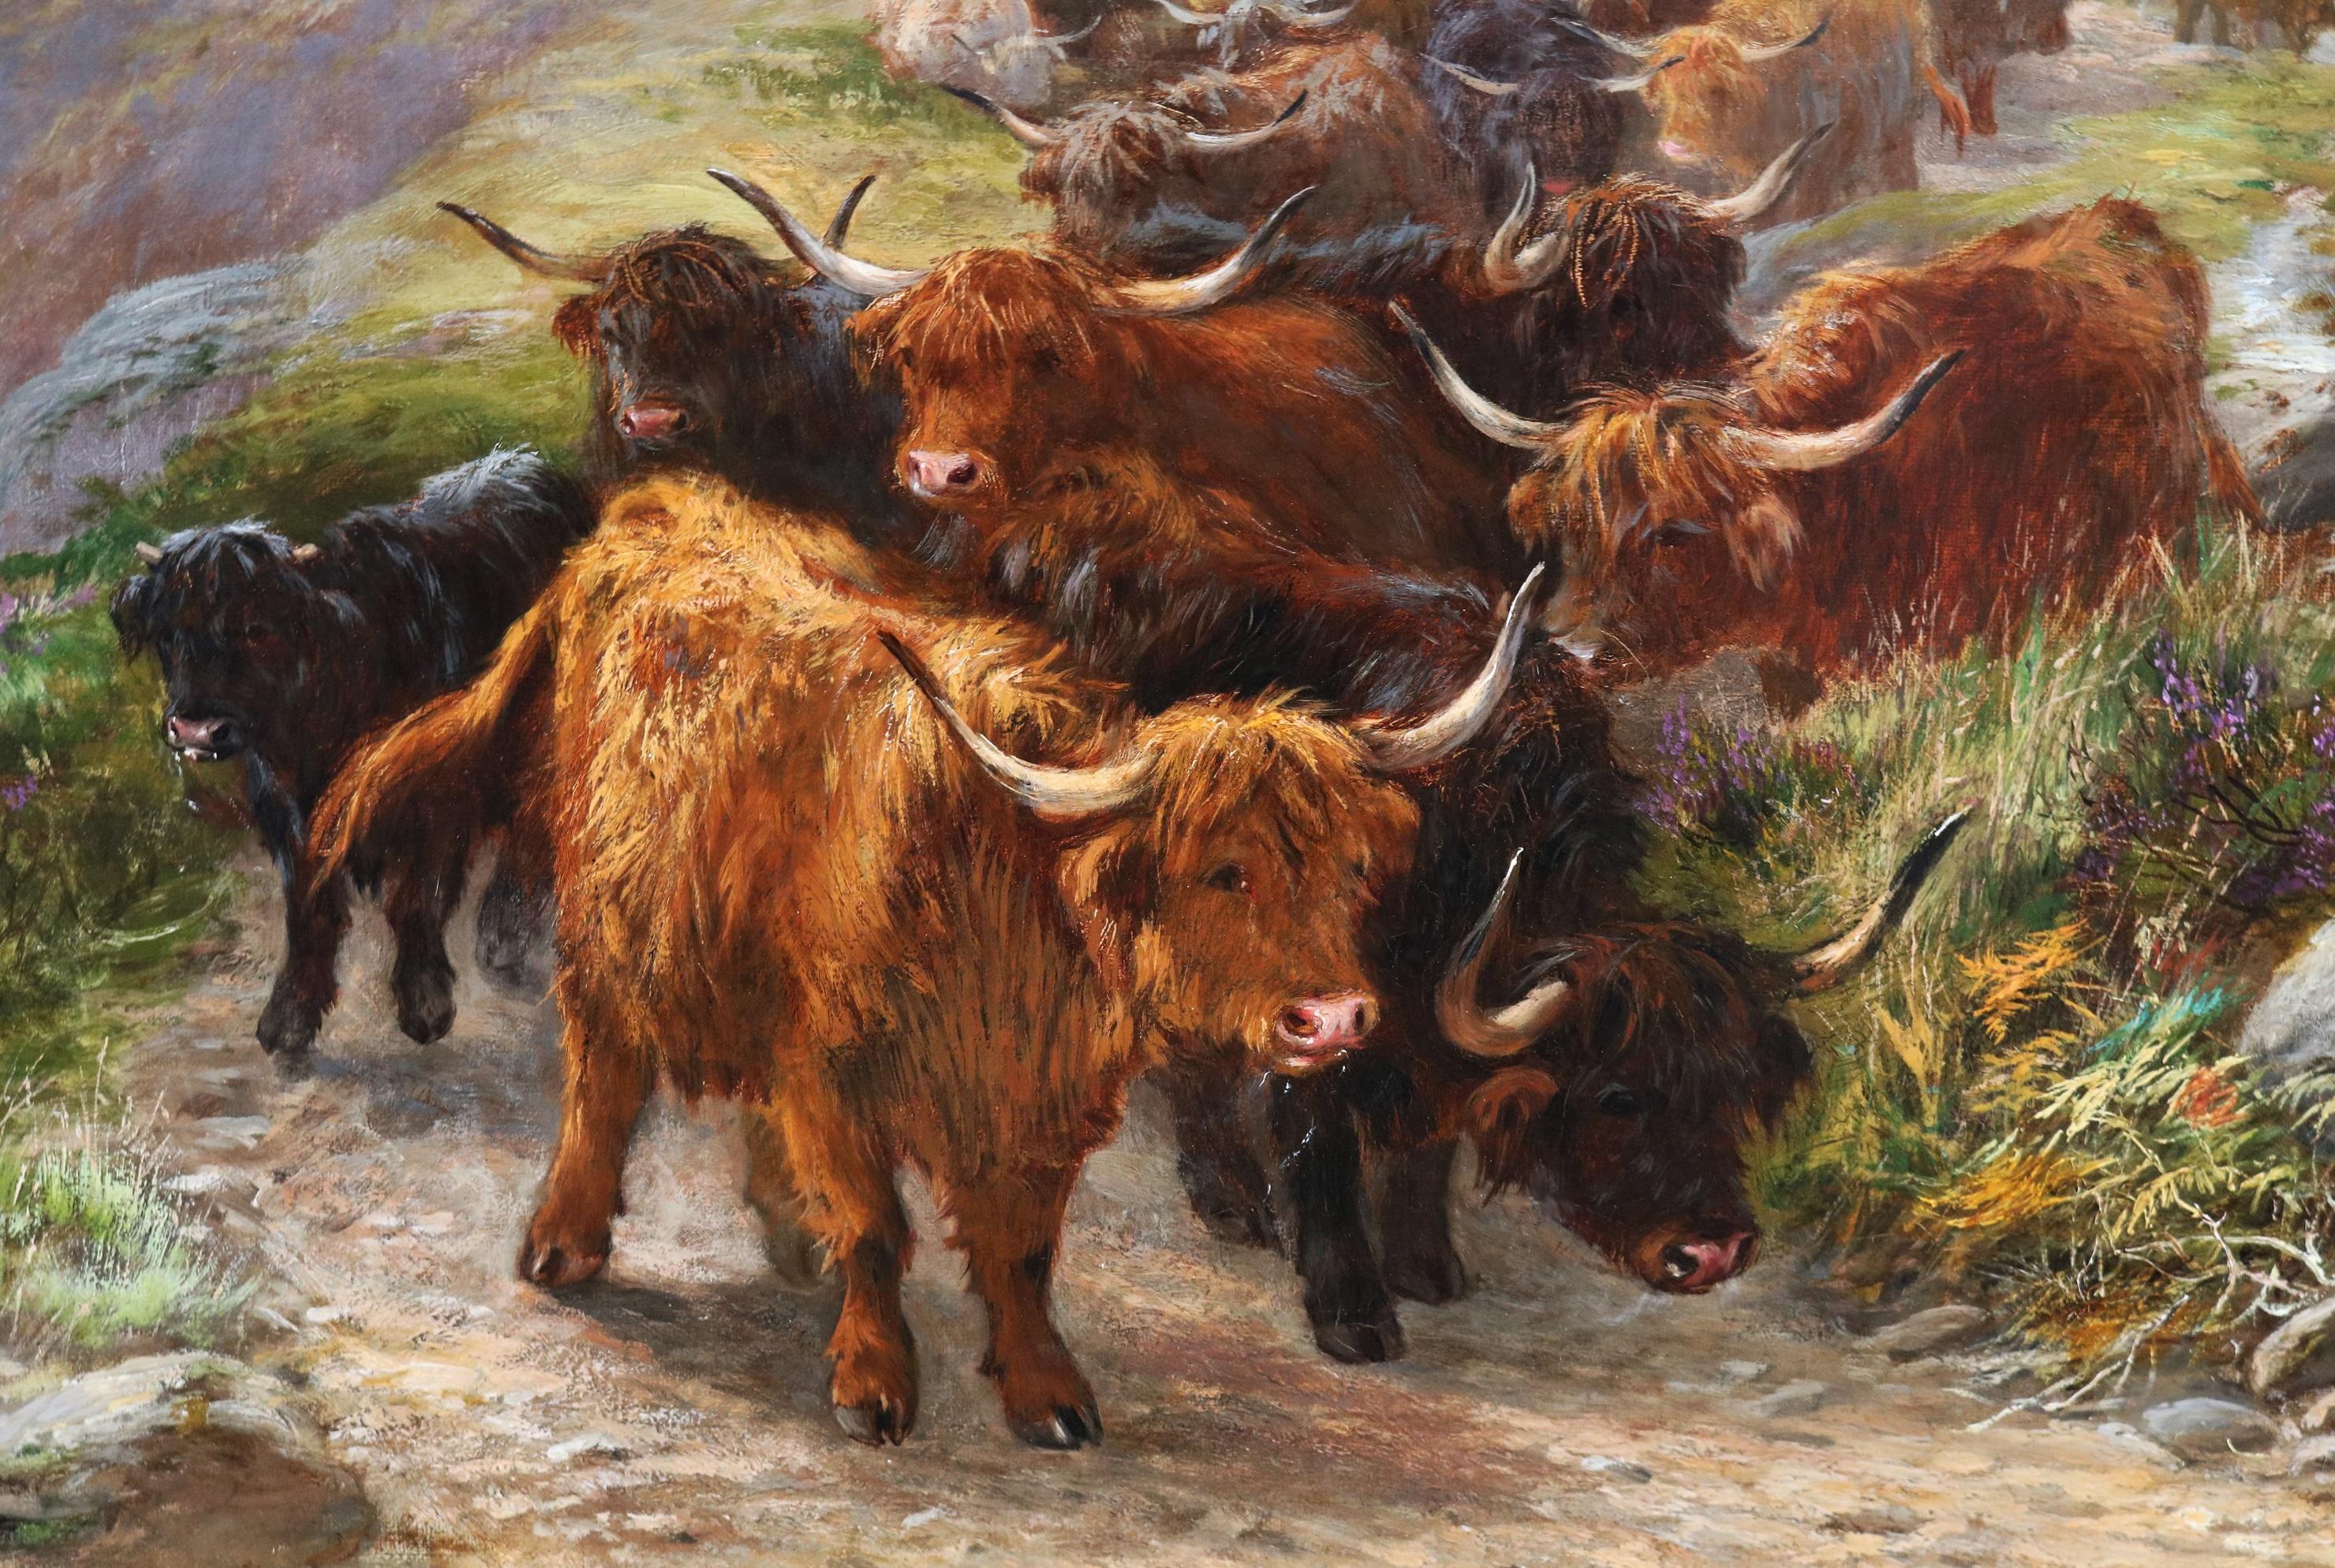 Longhorn Cattle on Highland Pass - Pintura al óleo de paisajes escoceses del siglo XIX  2